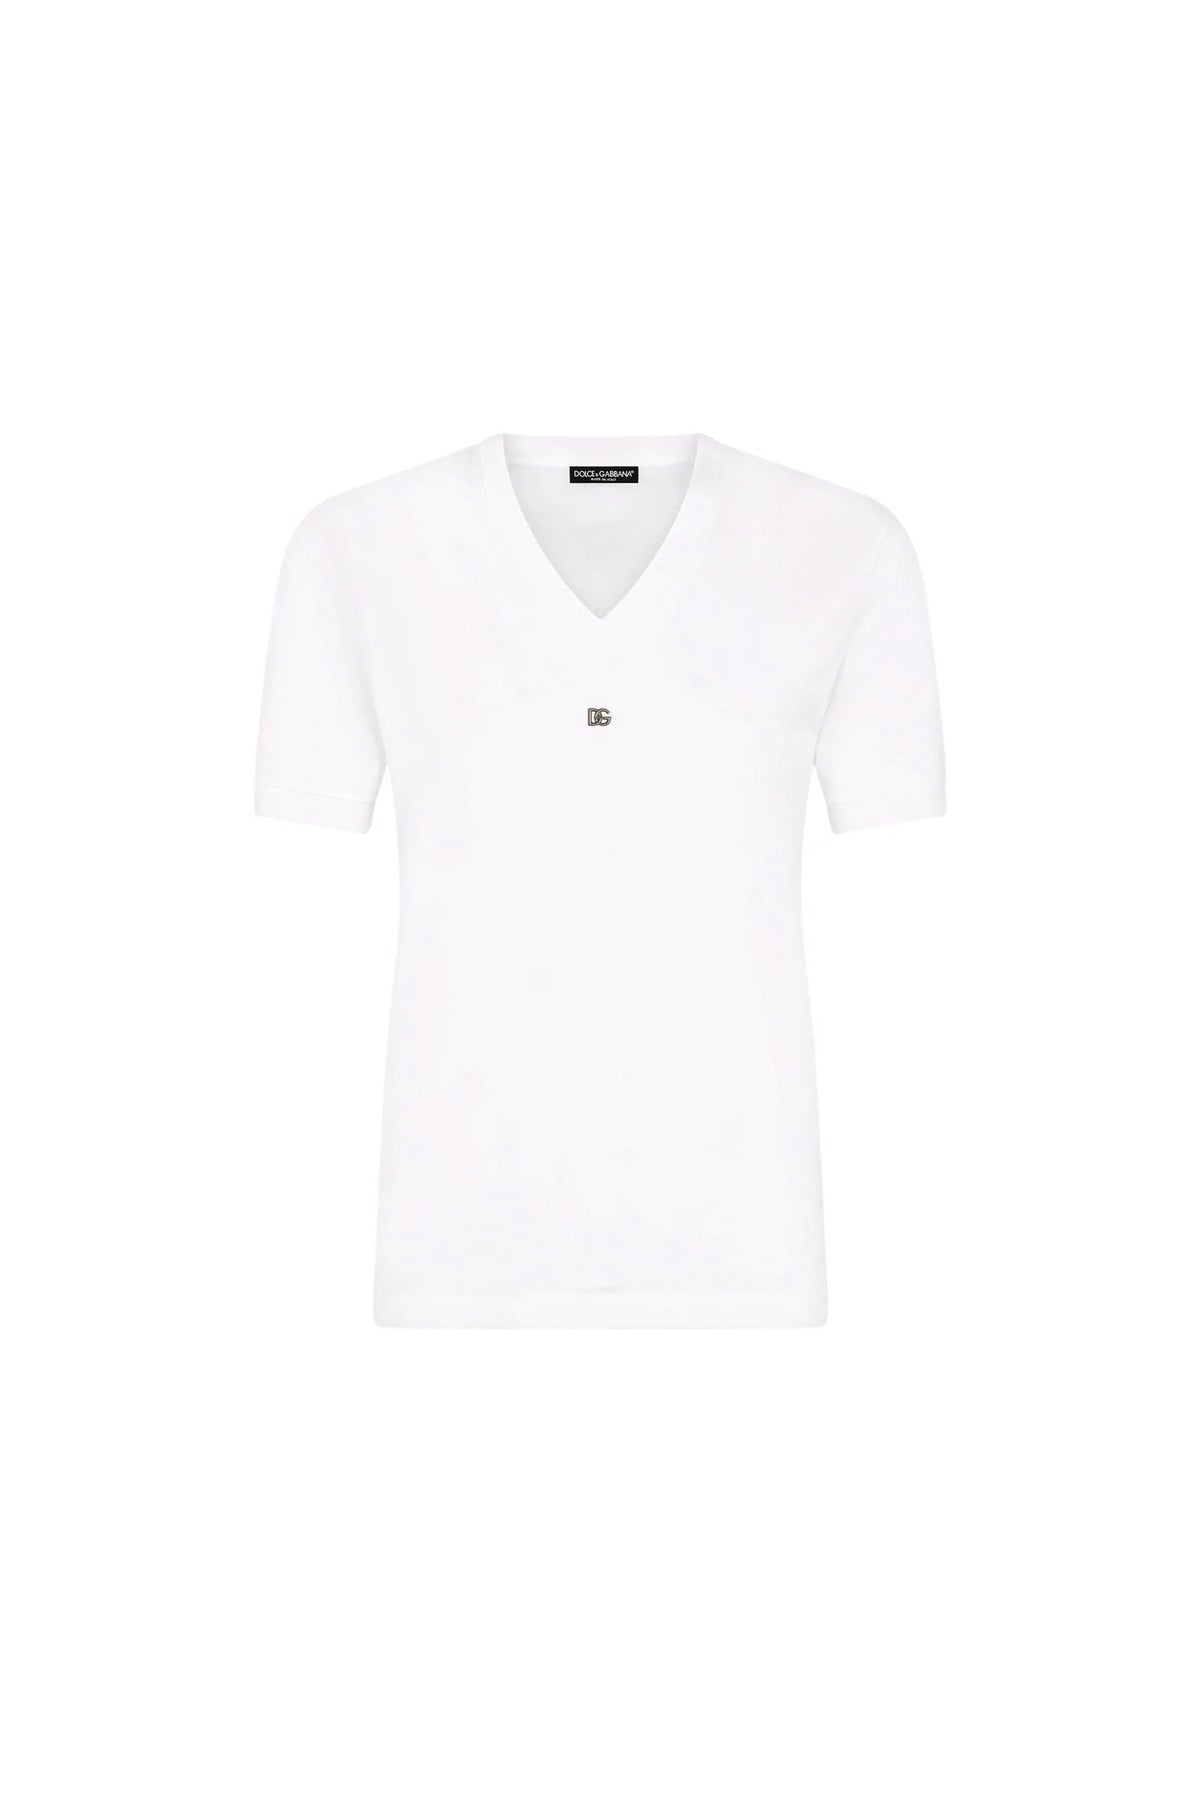 Dolce & Gabbana DG plaque V-neck T-shirt